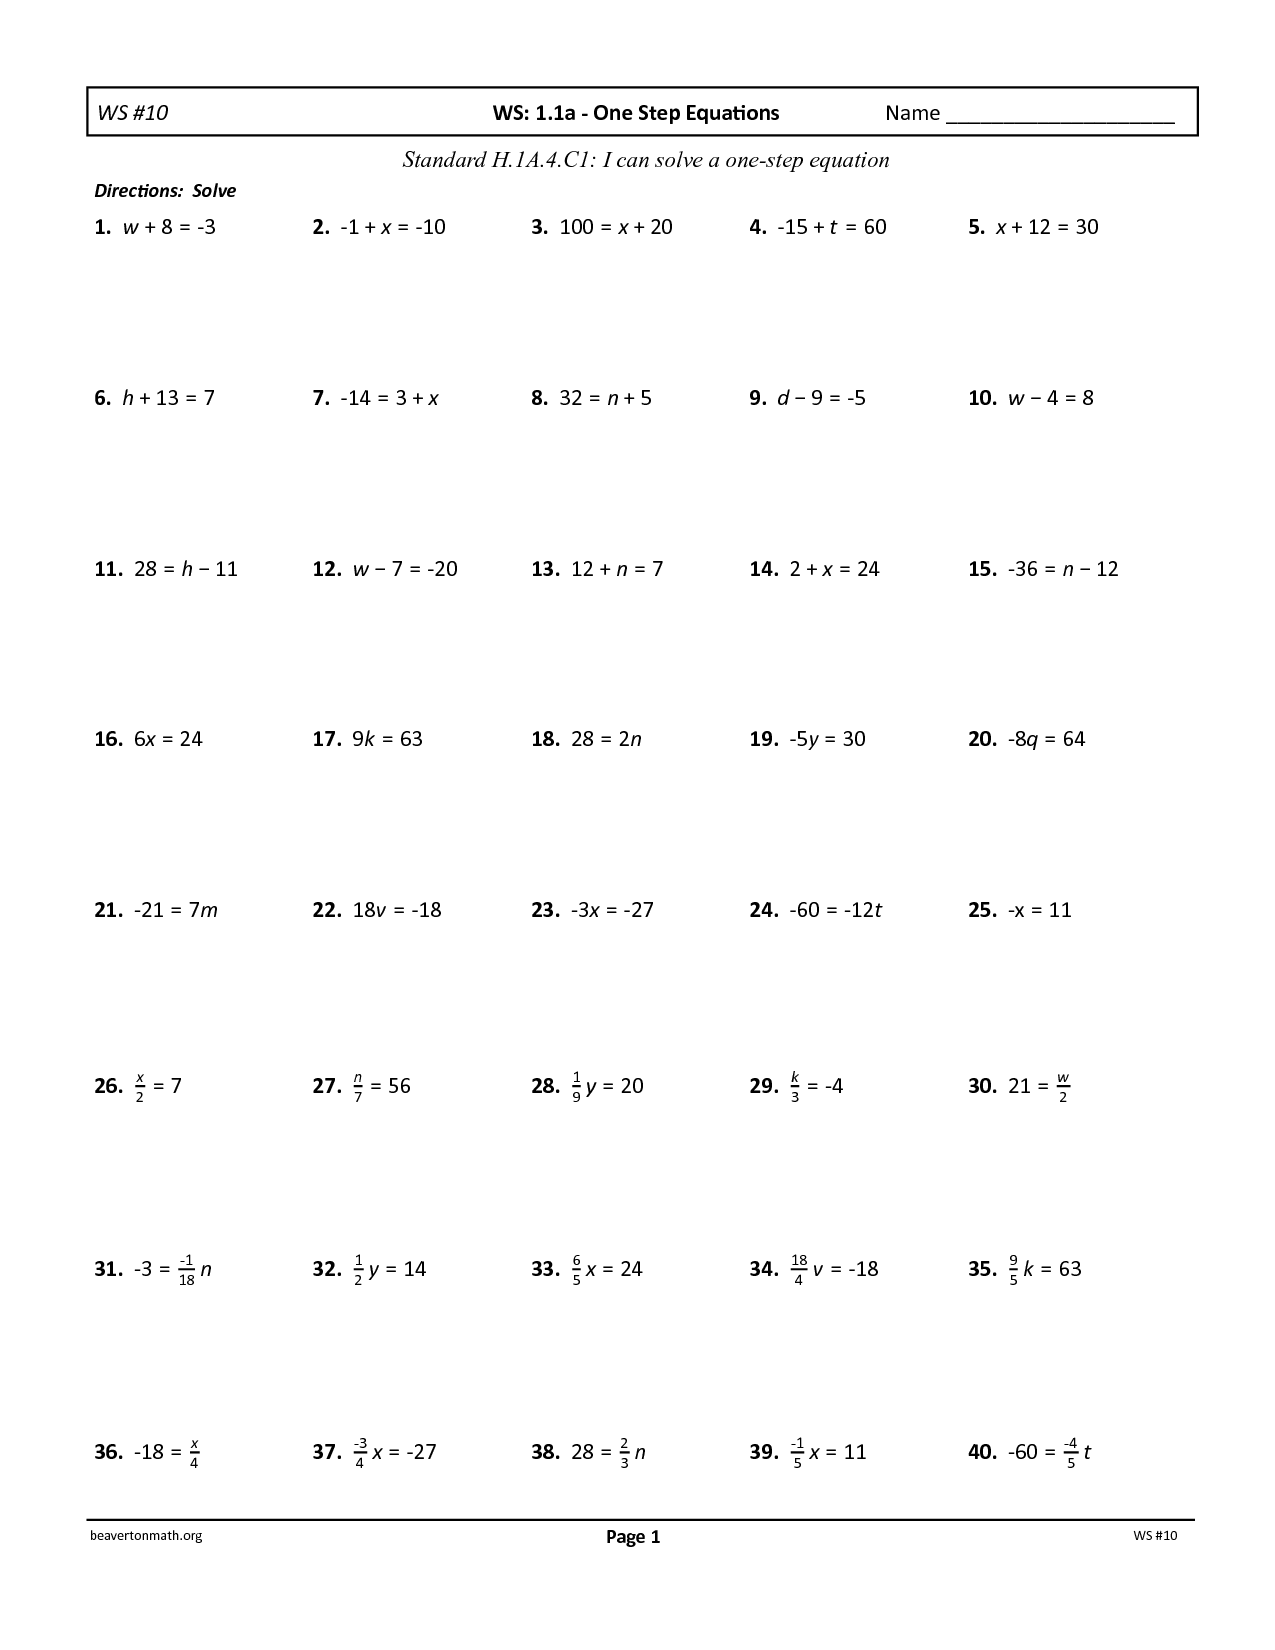 34 Fresh One Step Equations Worksheet 17